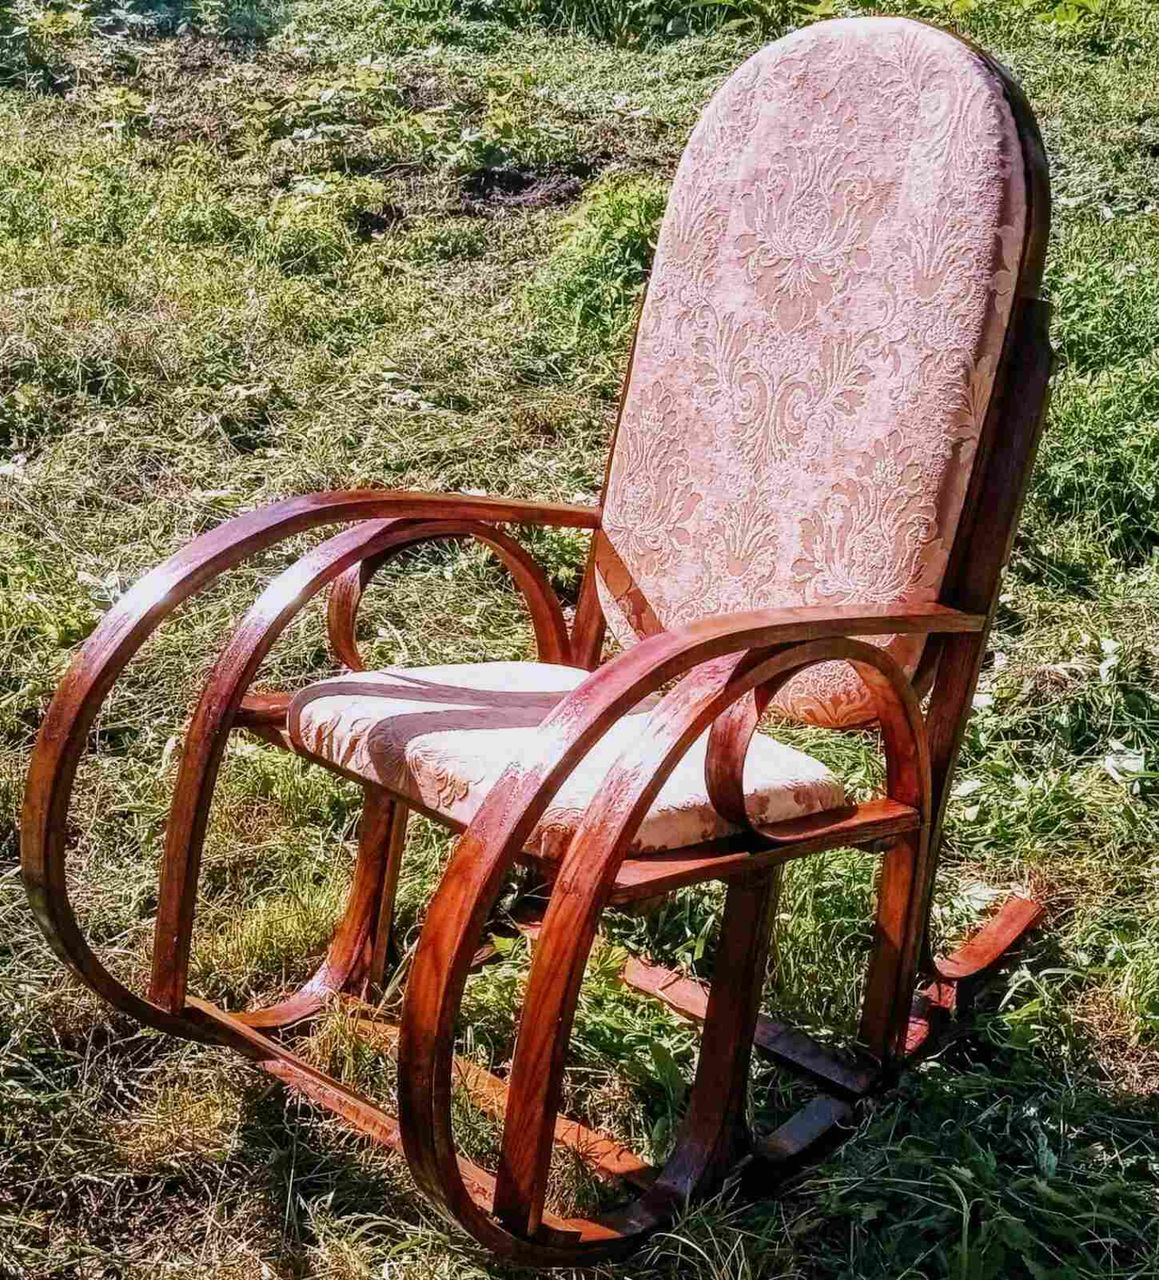 Кресло качалка на олх